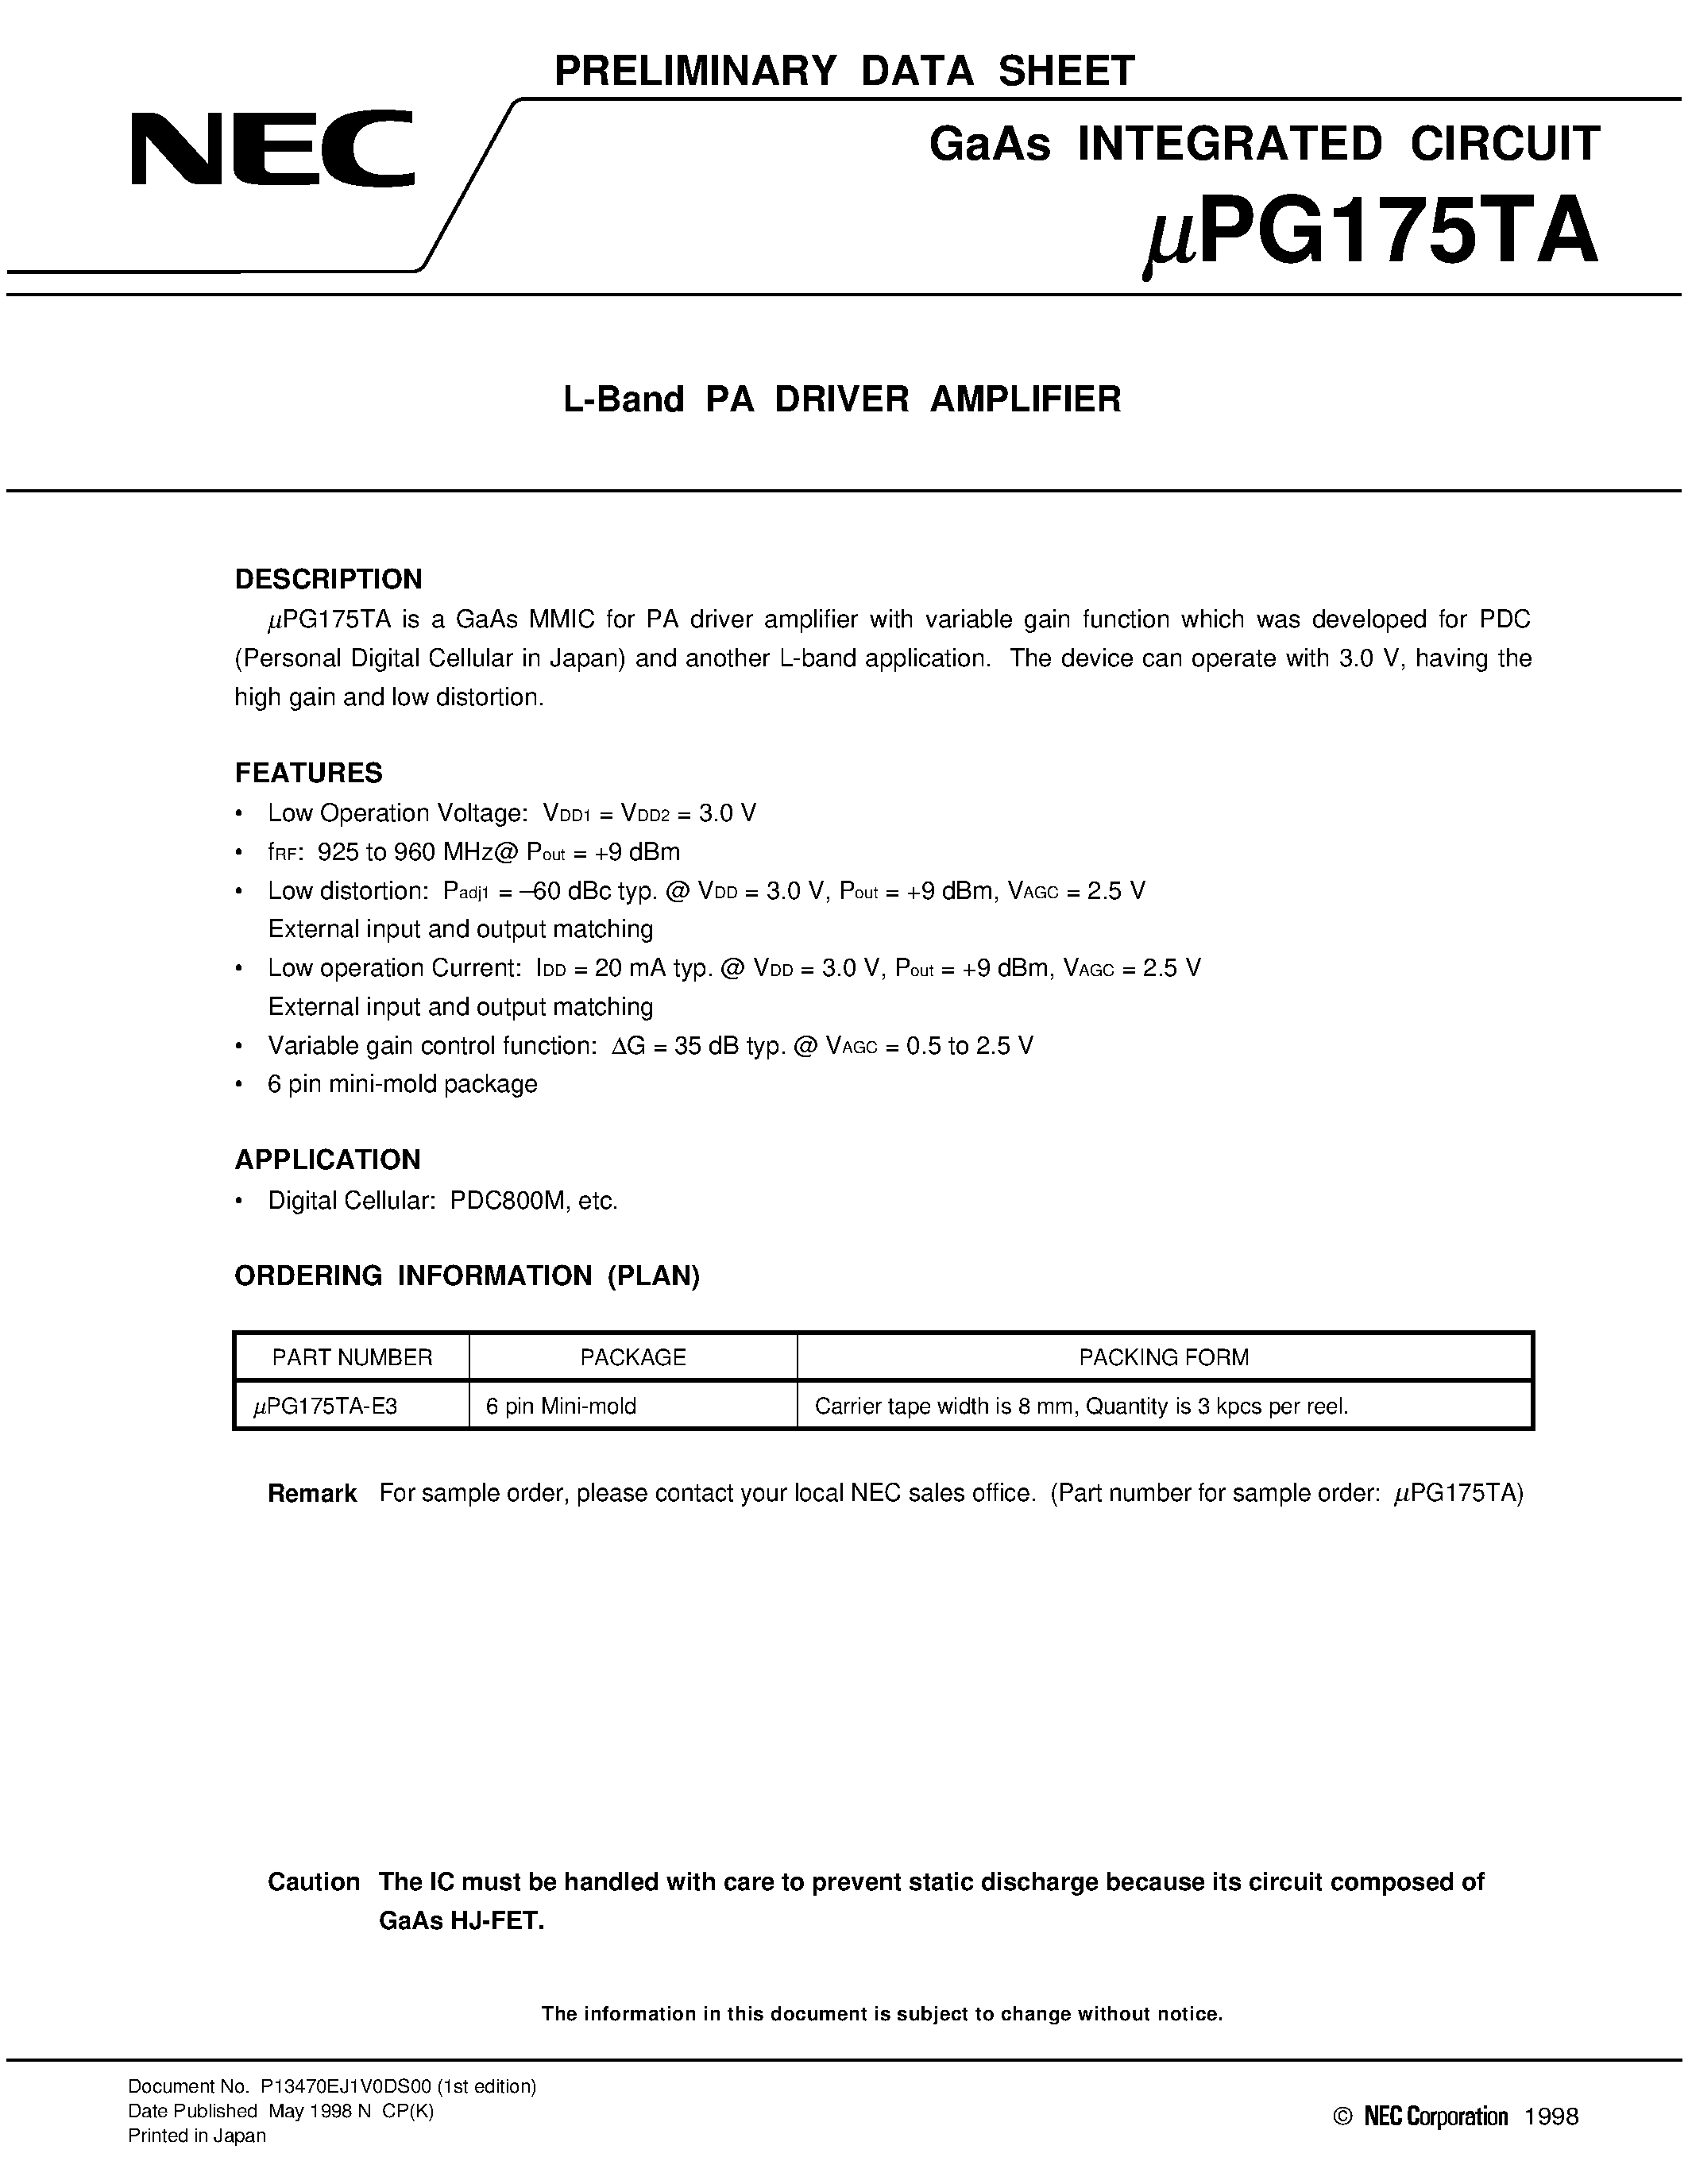 Datasheet UPG175TA-E3 - L-Band PA DRIVER AMPLIFIER page 1